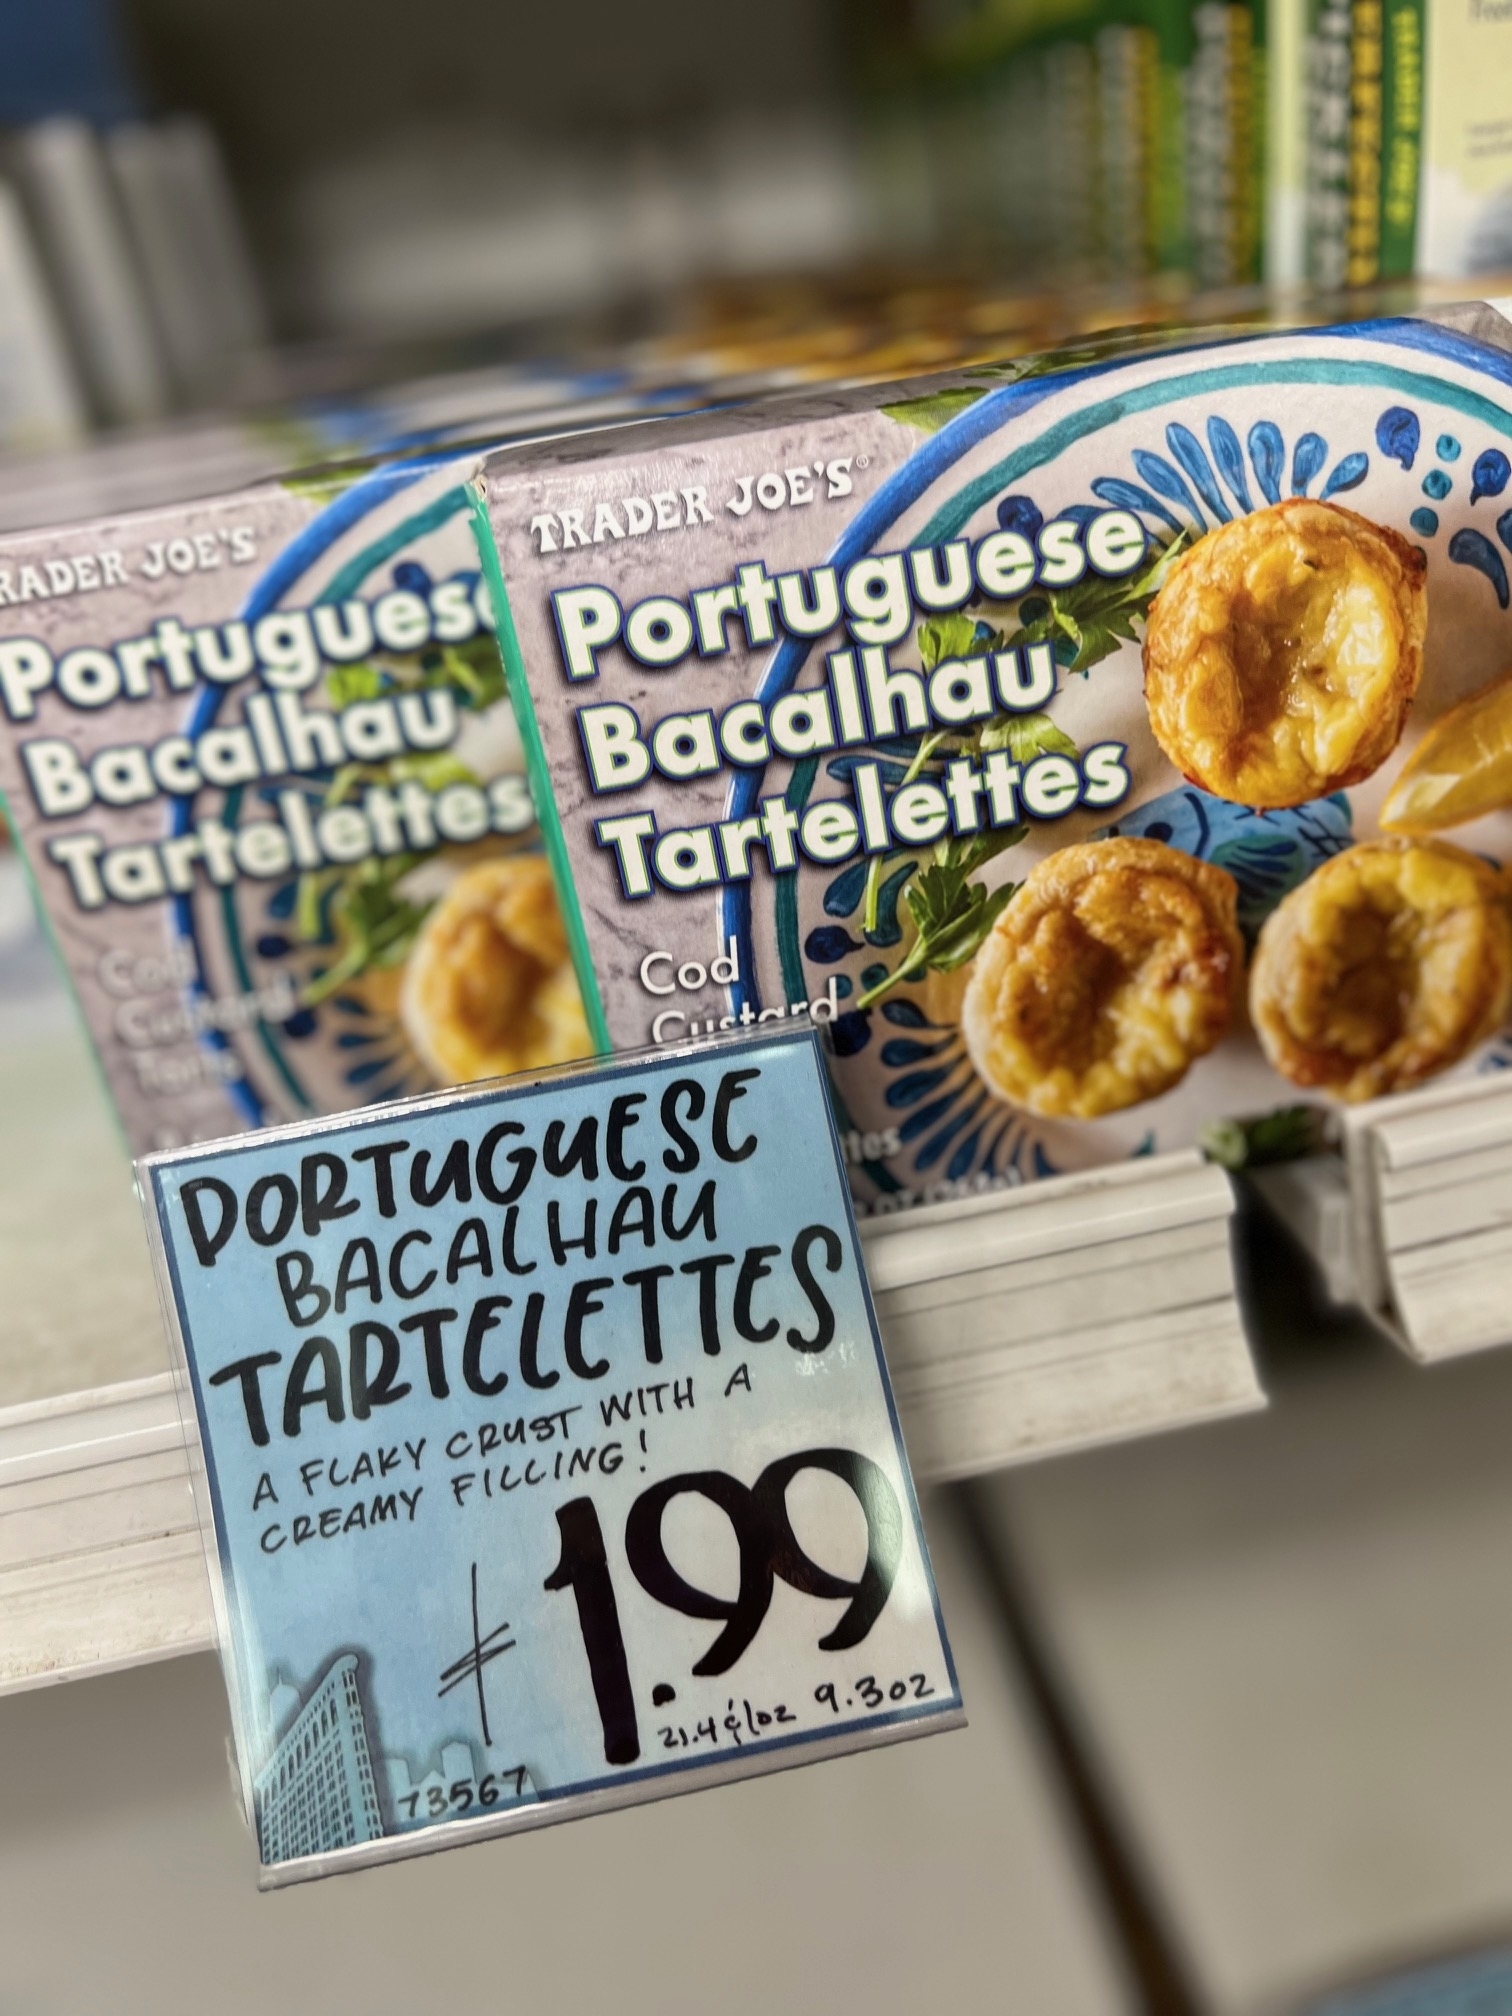 Trader Joe&#x27;s Portuguese Bacalhau Tartelettes boxes on shelf, price tag displays $1.99